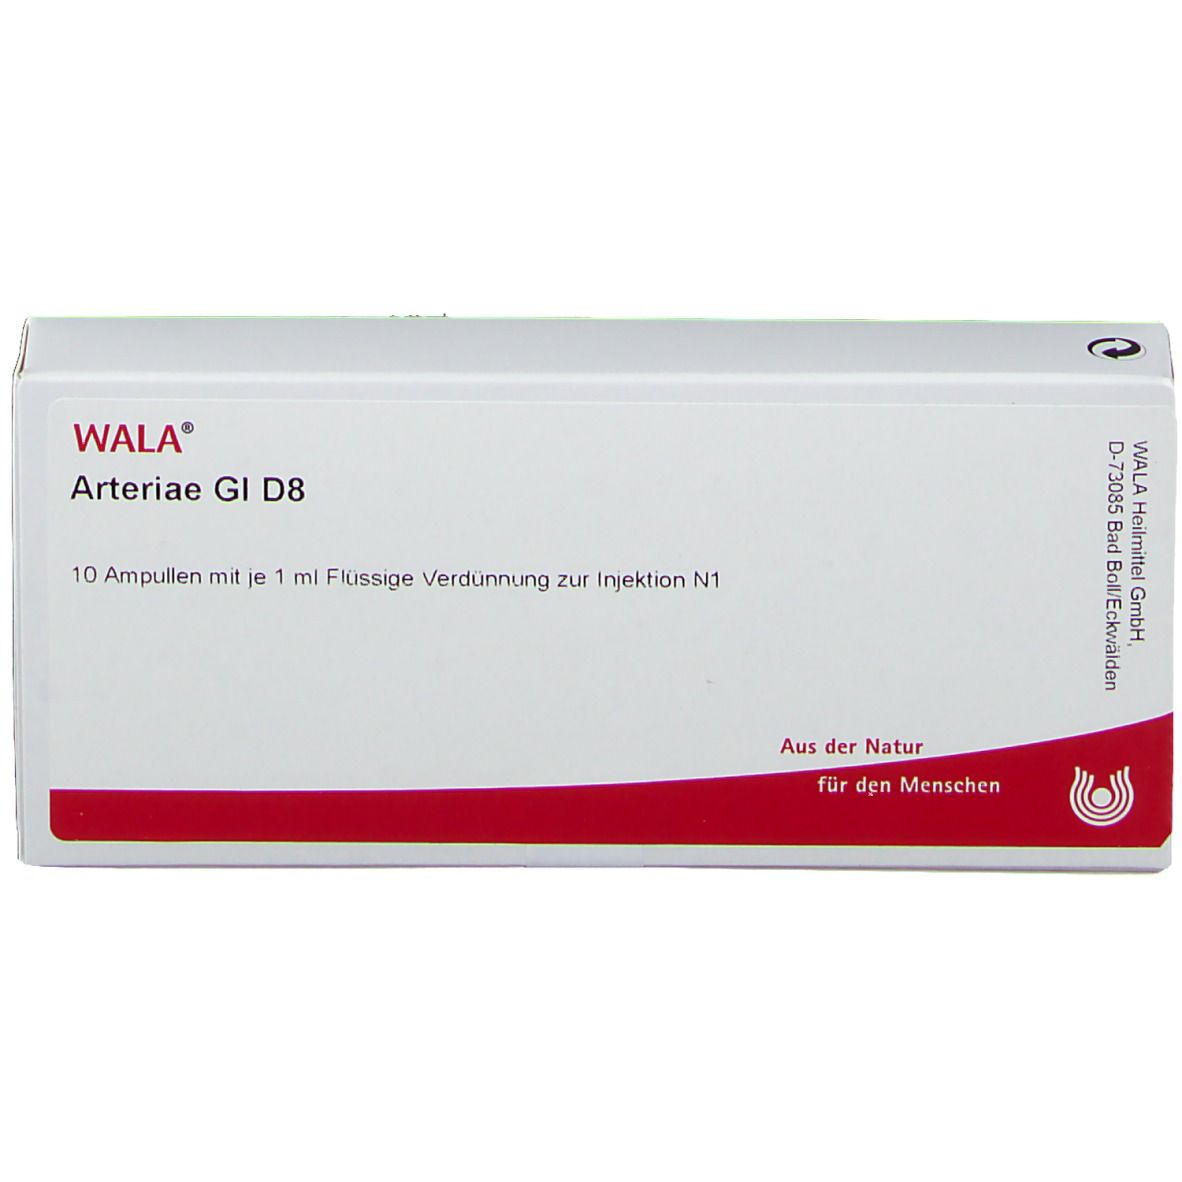 WALA® Arteriae Gl D 8